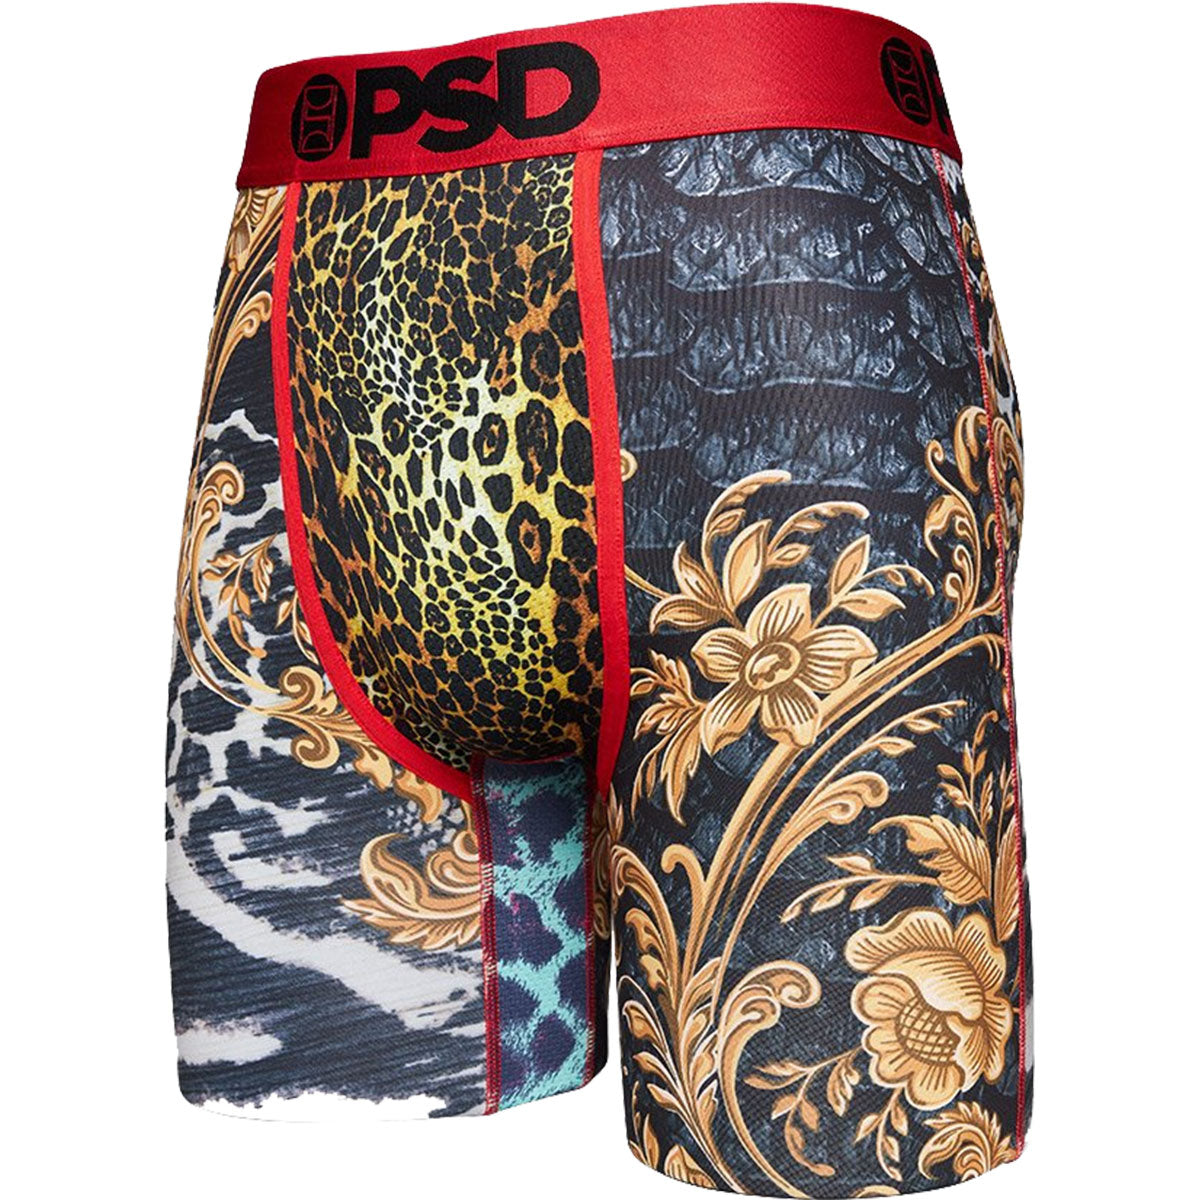 PSD Trojan Man Boxer Men's Bottom Underwear (Refurbished, Without